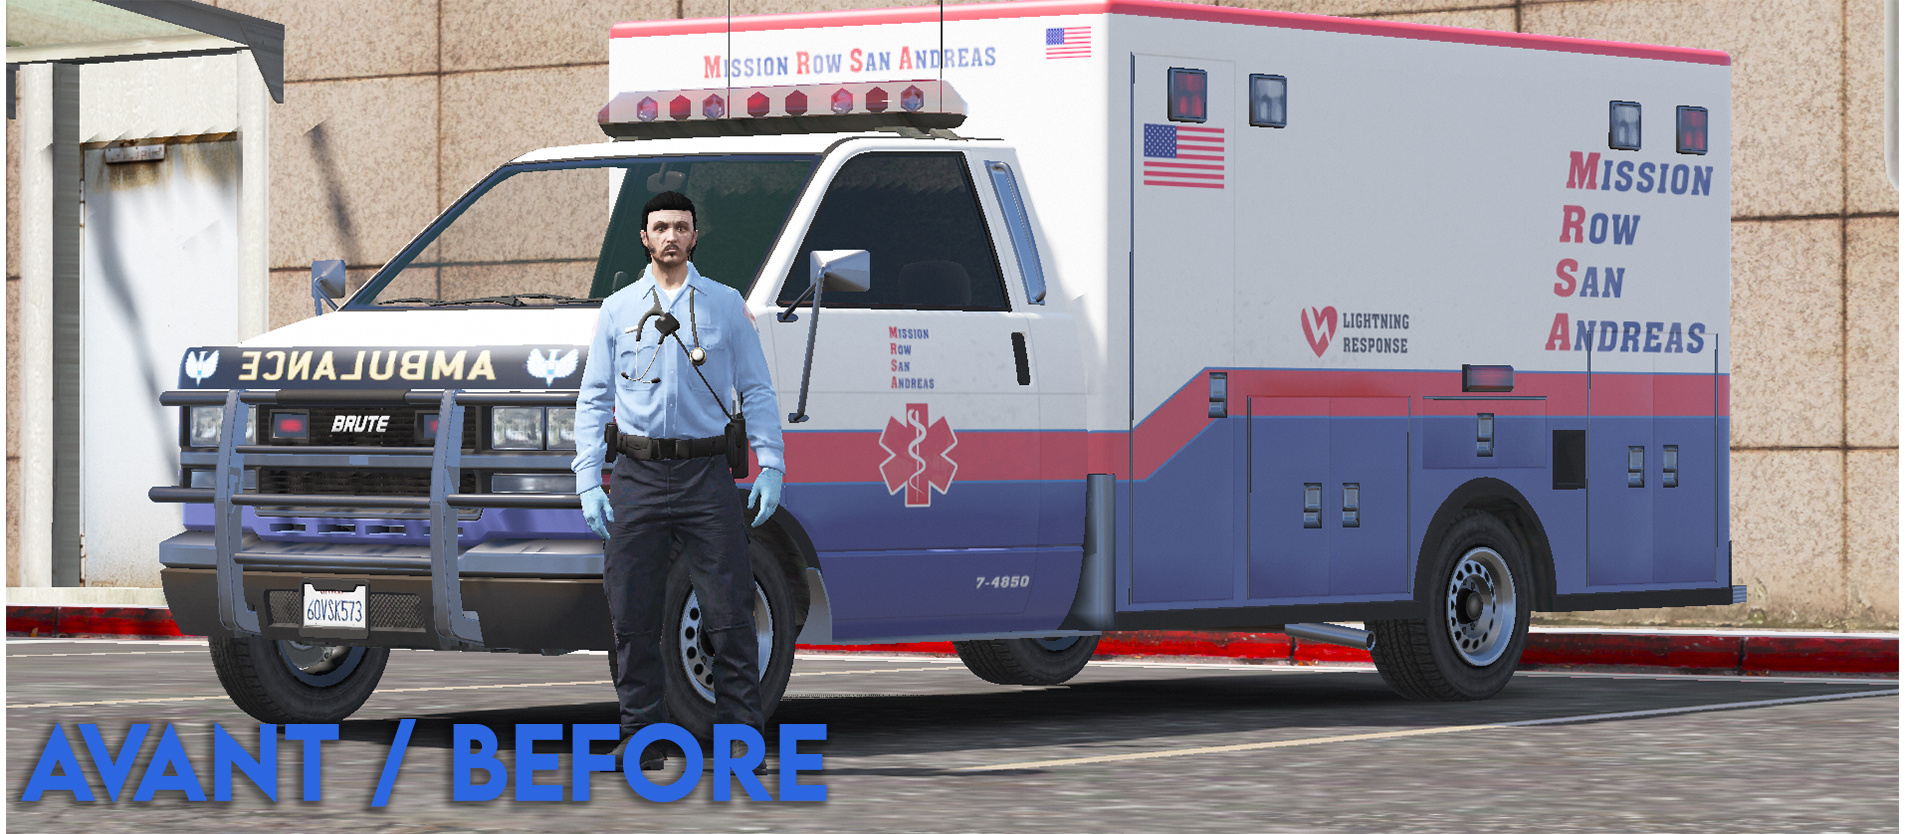 [REMAKE] Ambulance Mission Row San Andreas - Gta5-Hub.com